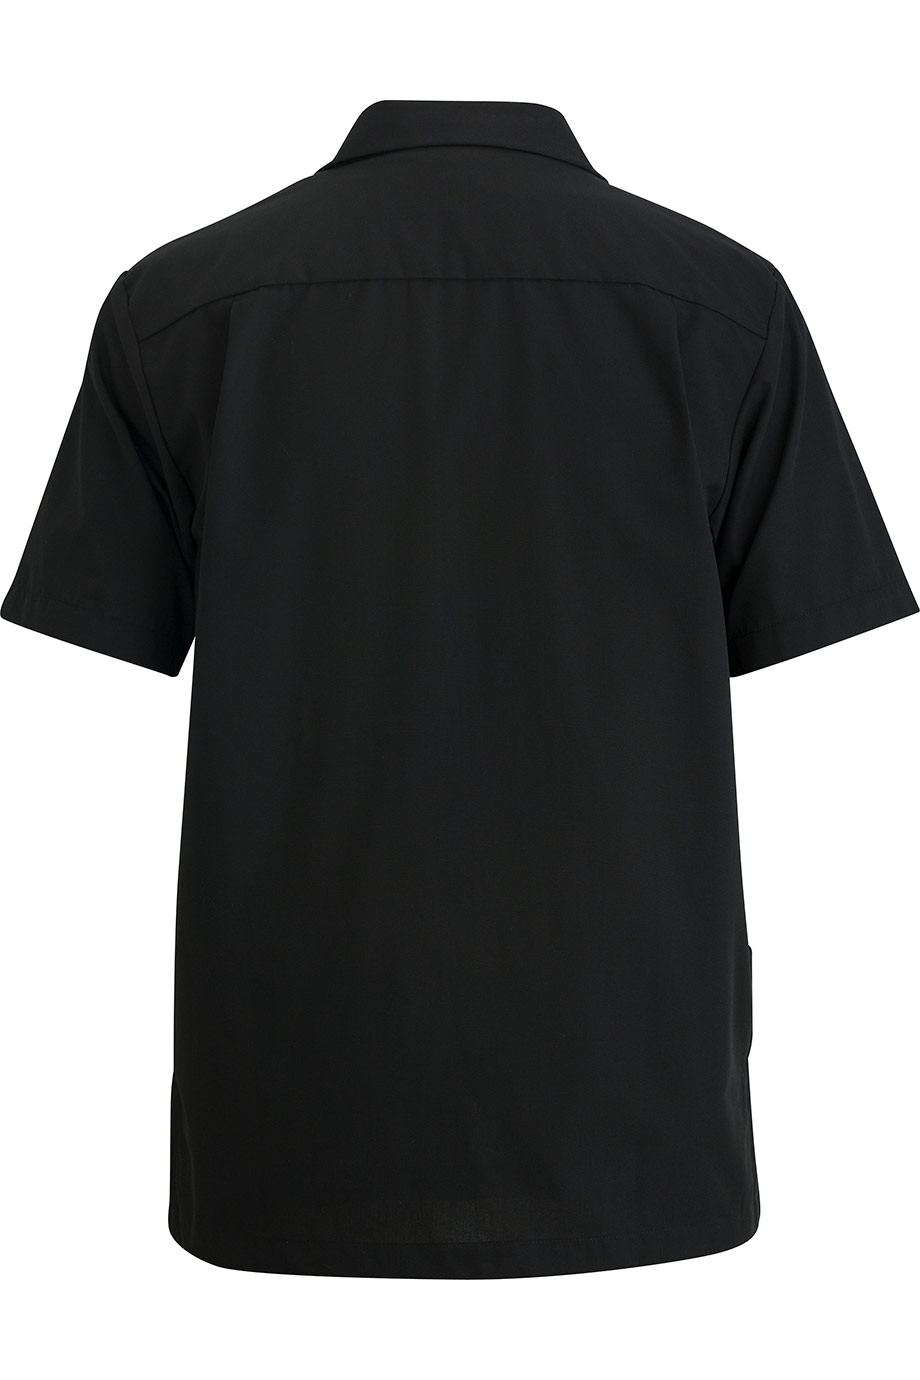 Essential Zip-Front Service Shirt